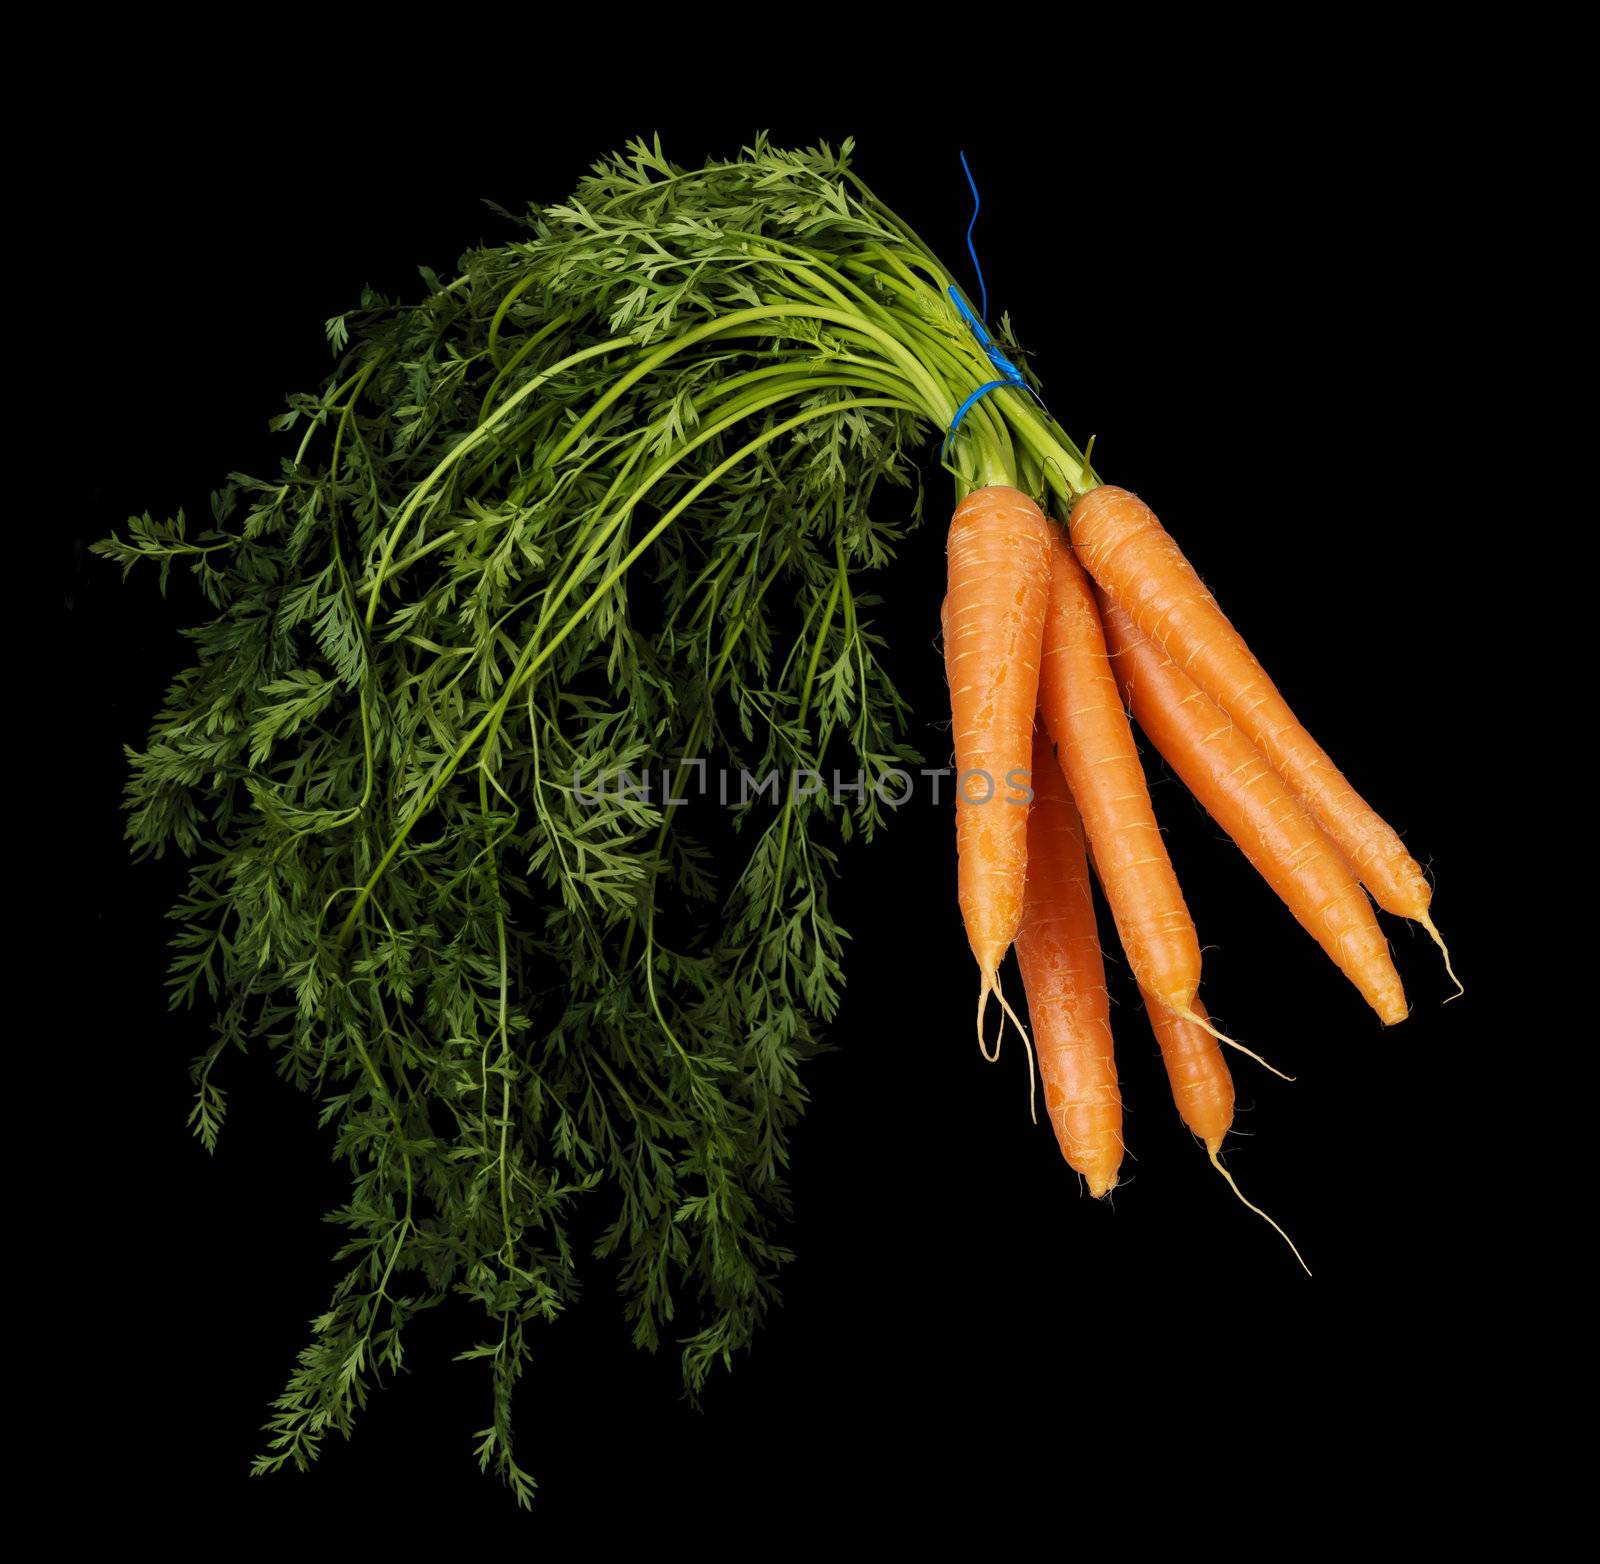 Bunch of carrots